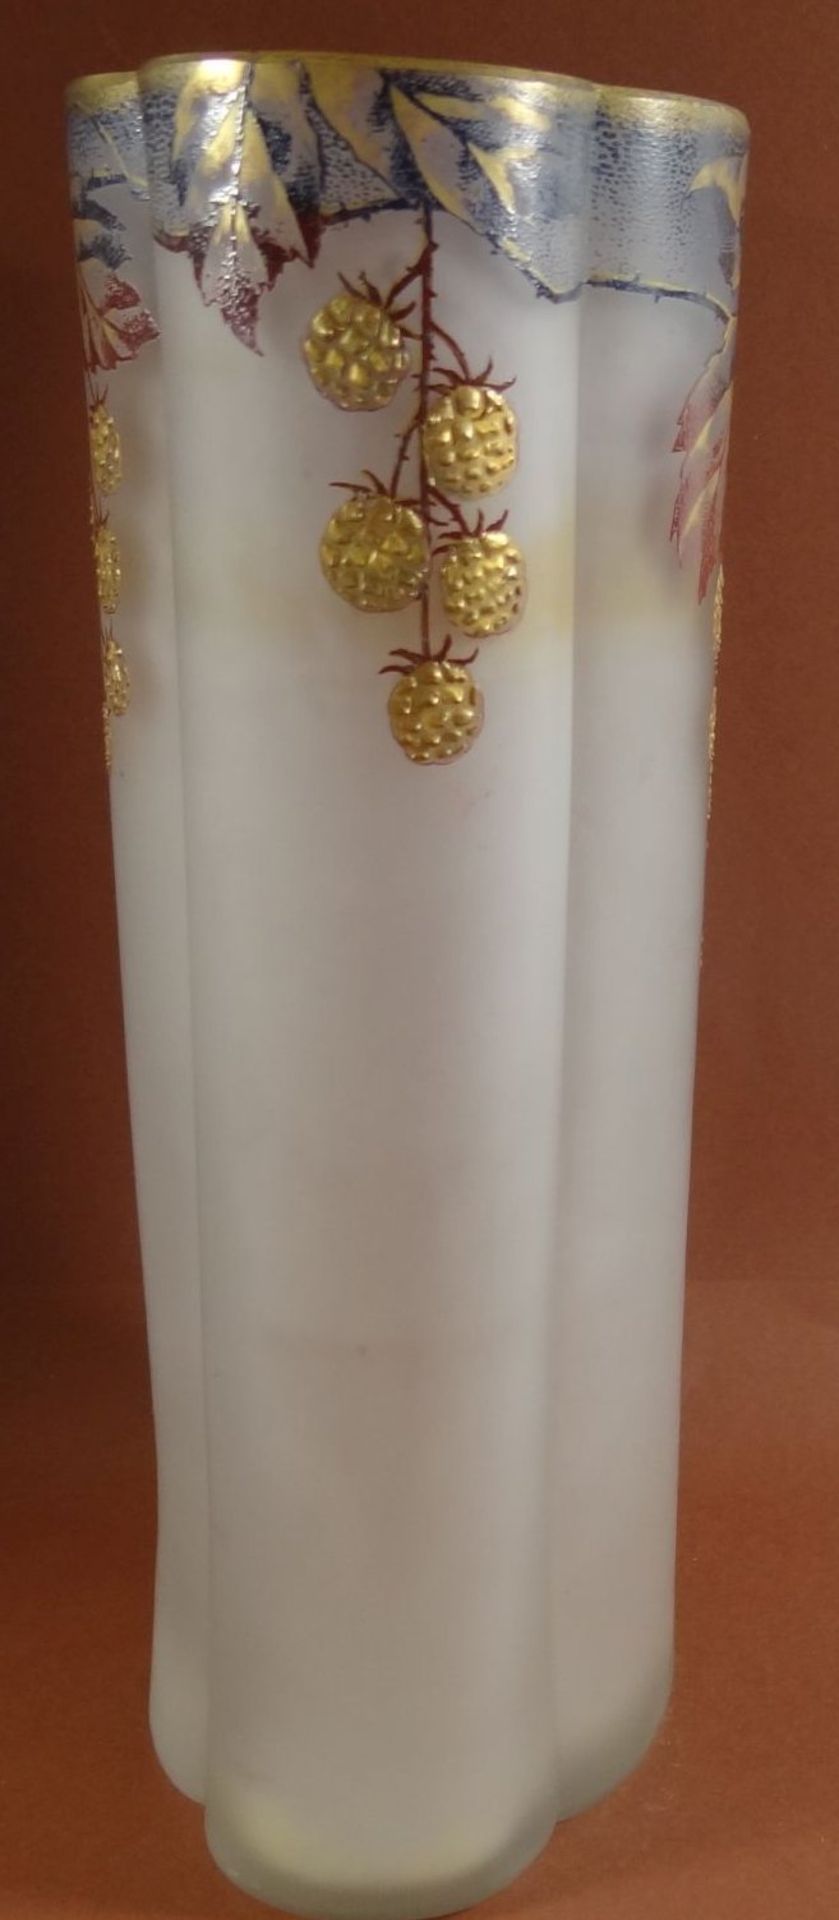 ovoide Jugendstil-Vase, Milchglas  mit Beerendekor, H-22 cm, B-11 cm - Bild 5 aus 8